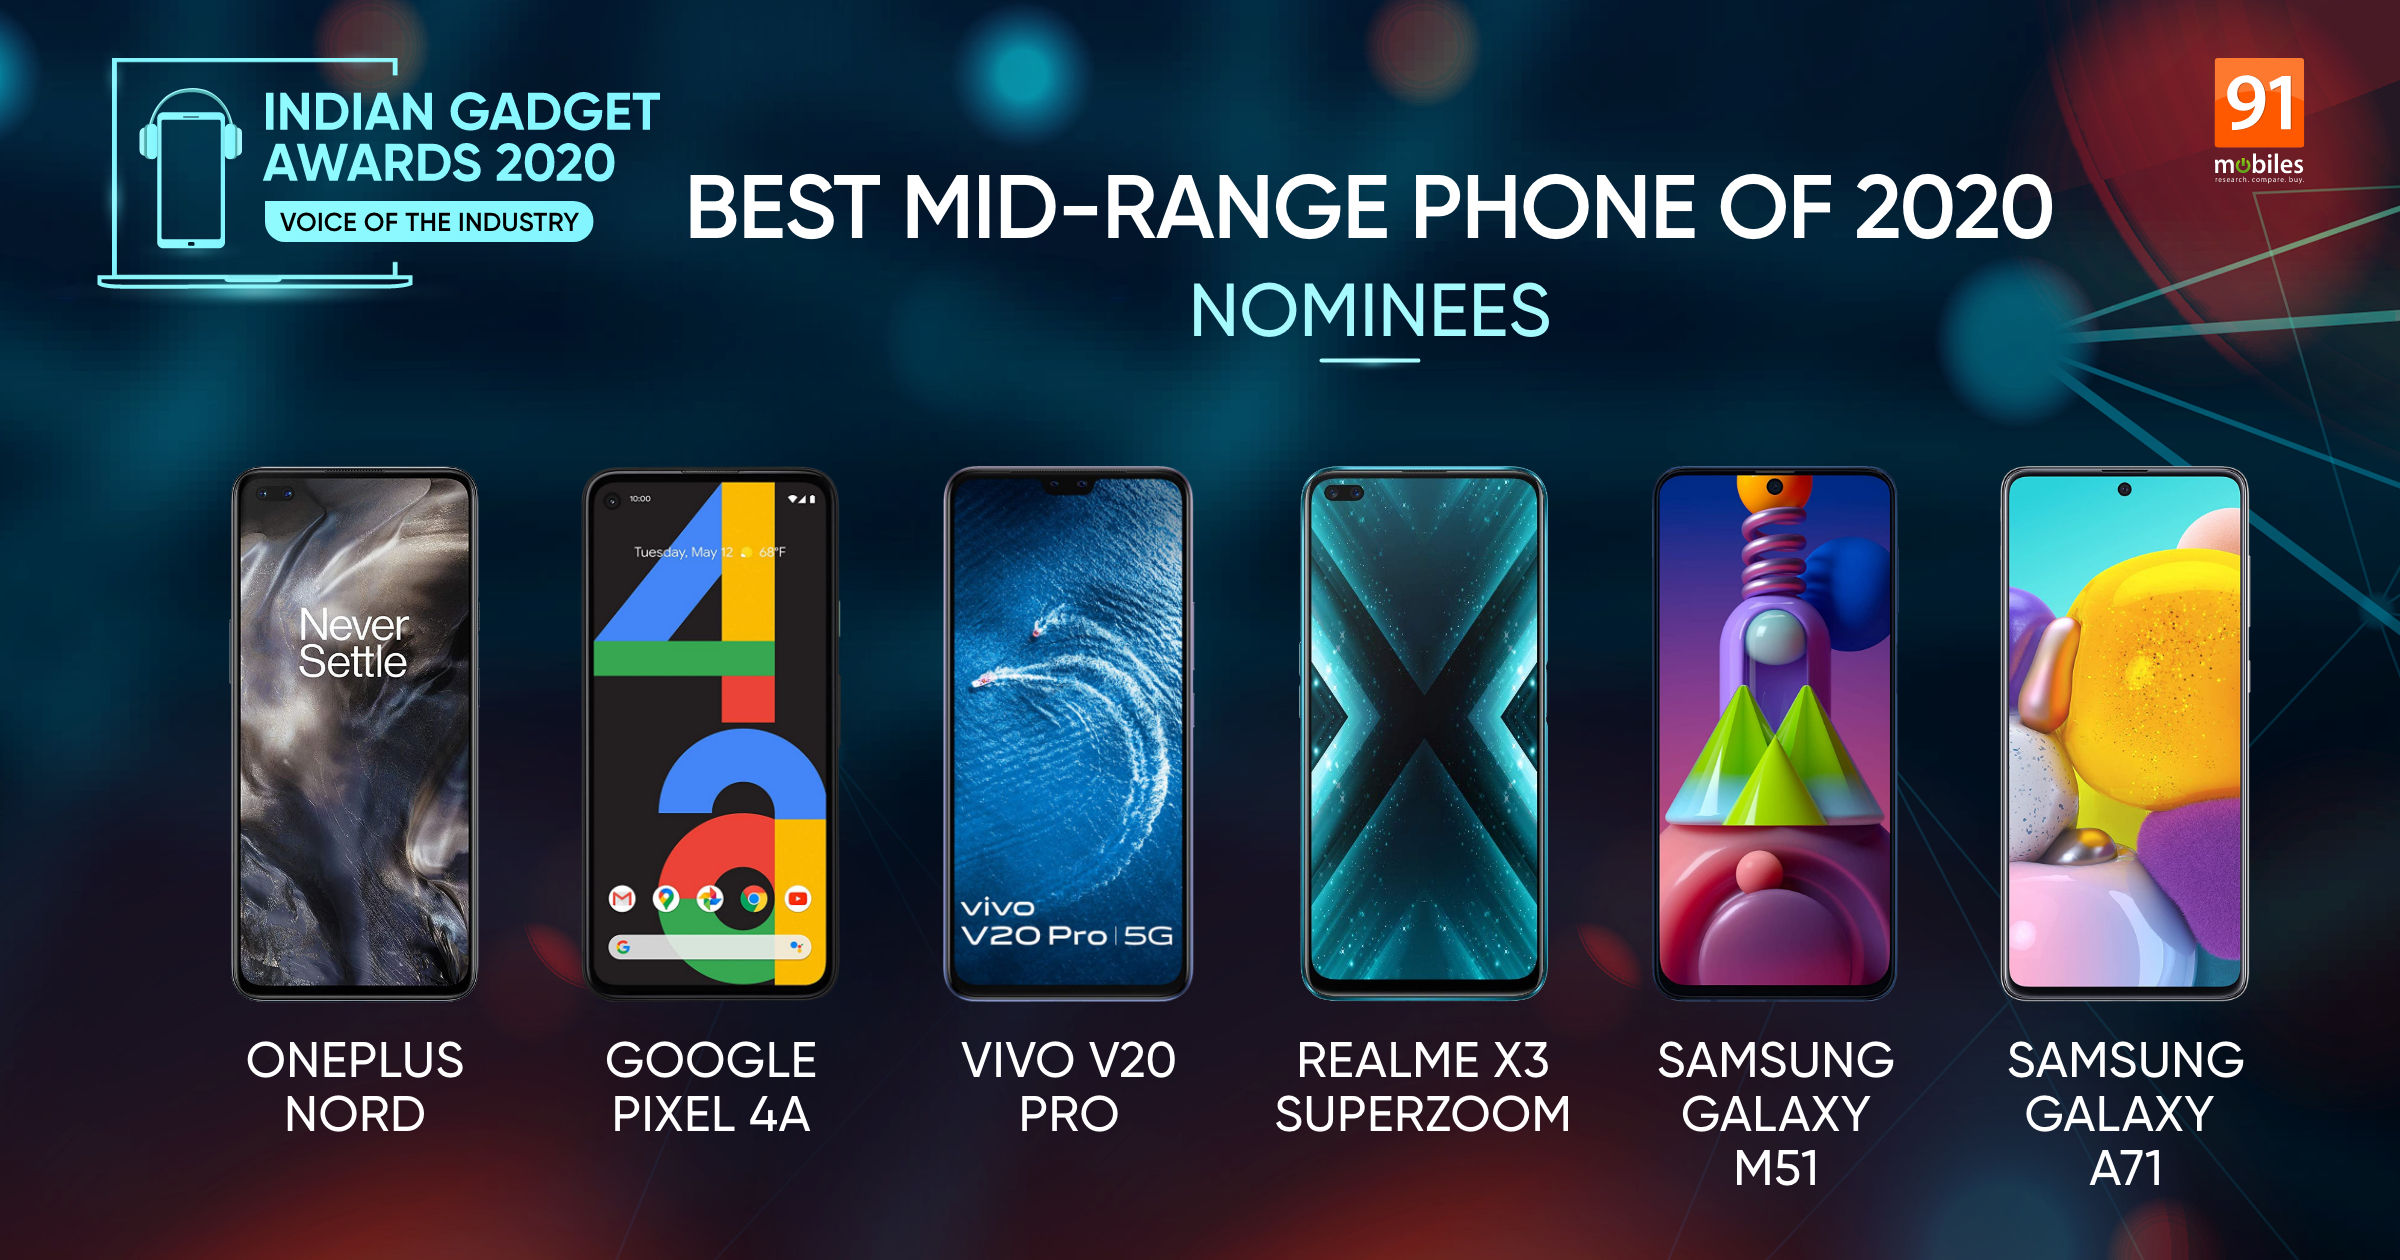 Indian Gadget Awards Best Midrange Phone of 2020 nominees OnePlus